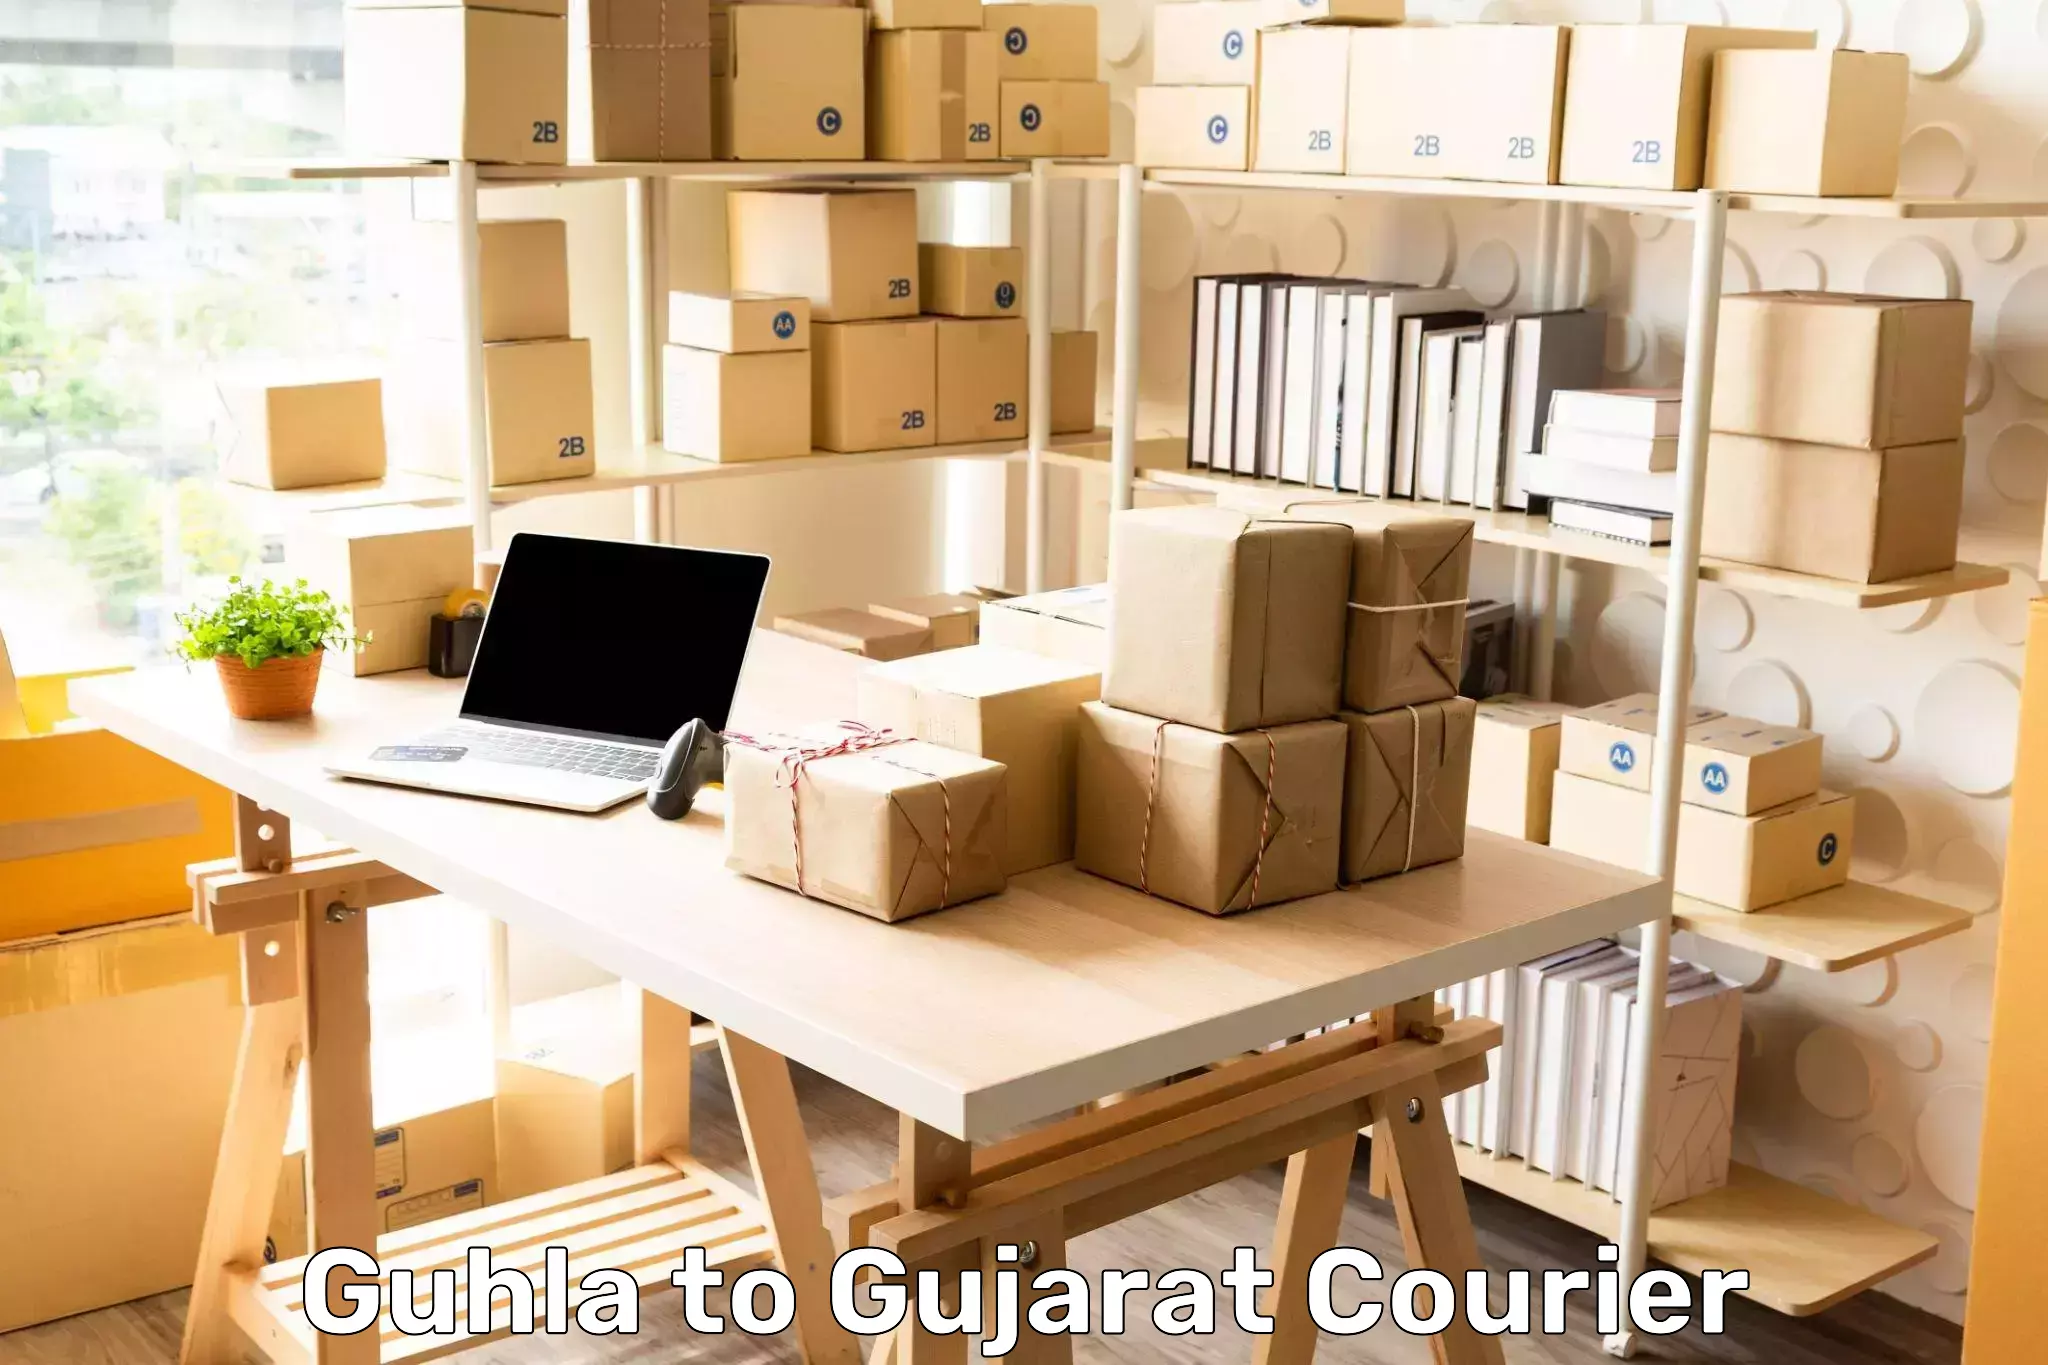 24/7 courier service in Guhla to Gujarat